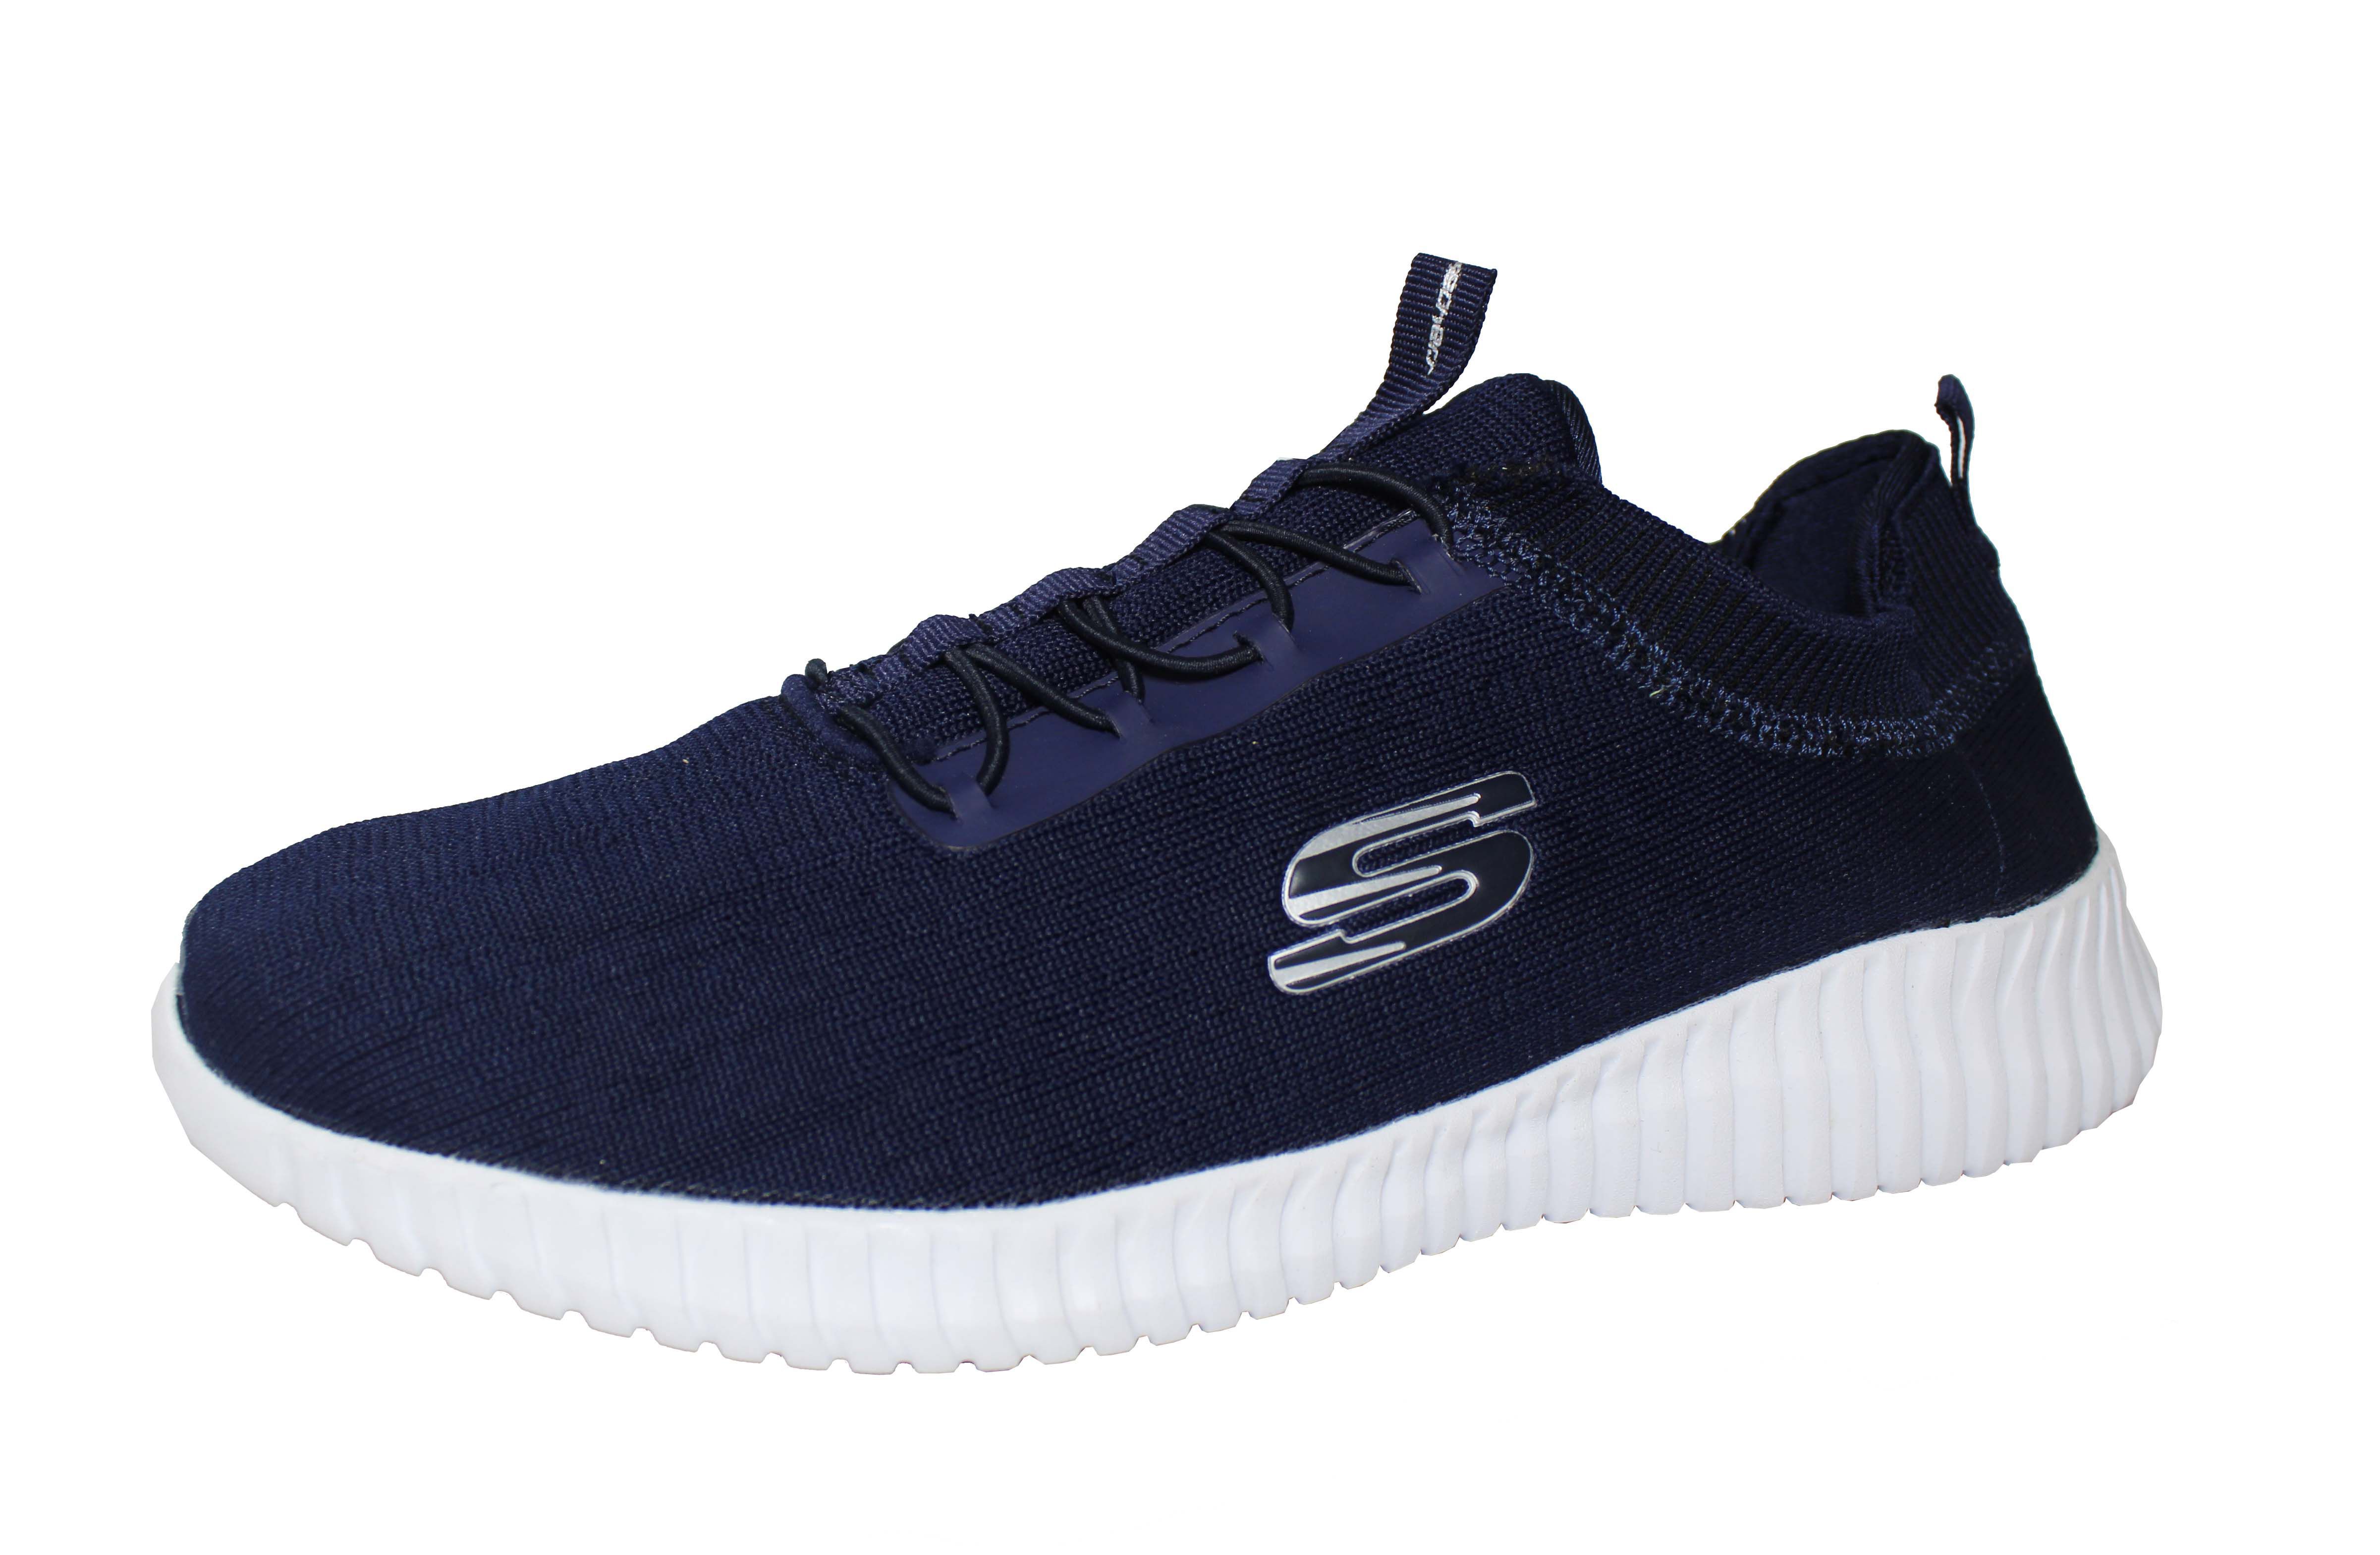 SKECHERS PERFORMANCE S6 Navy Running Shoes - Buy SKECHERS PERFORMANCE ...